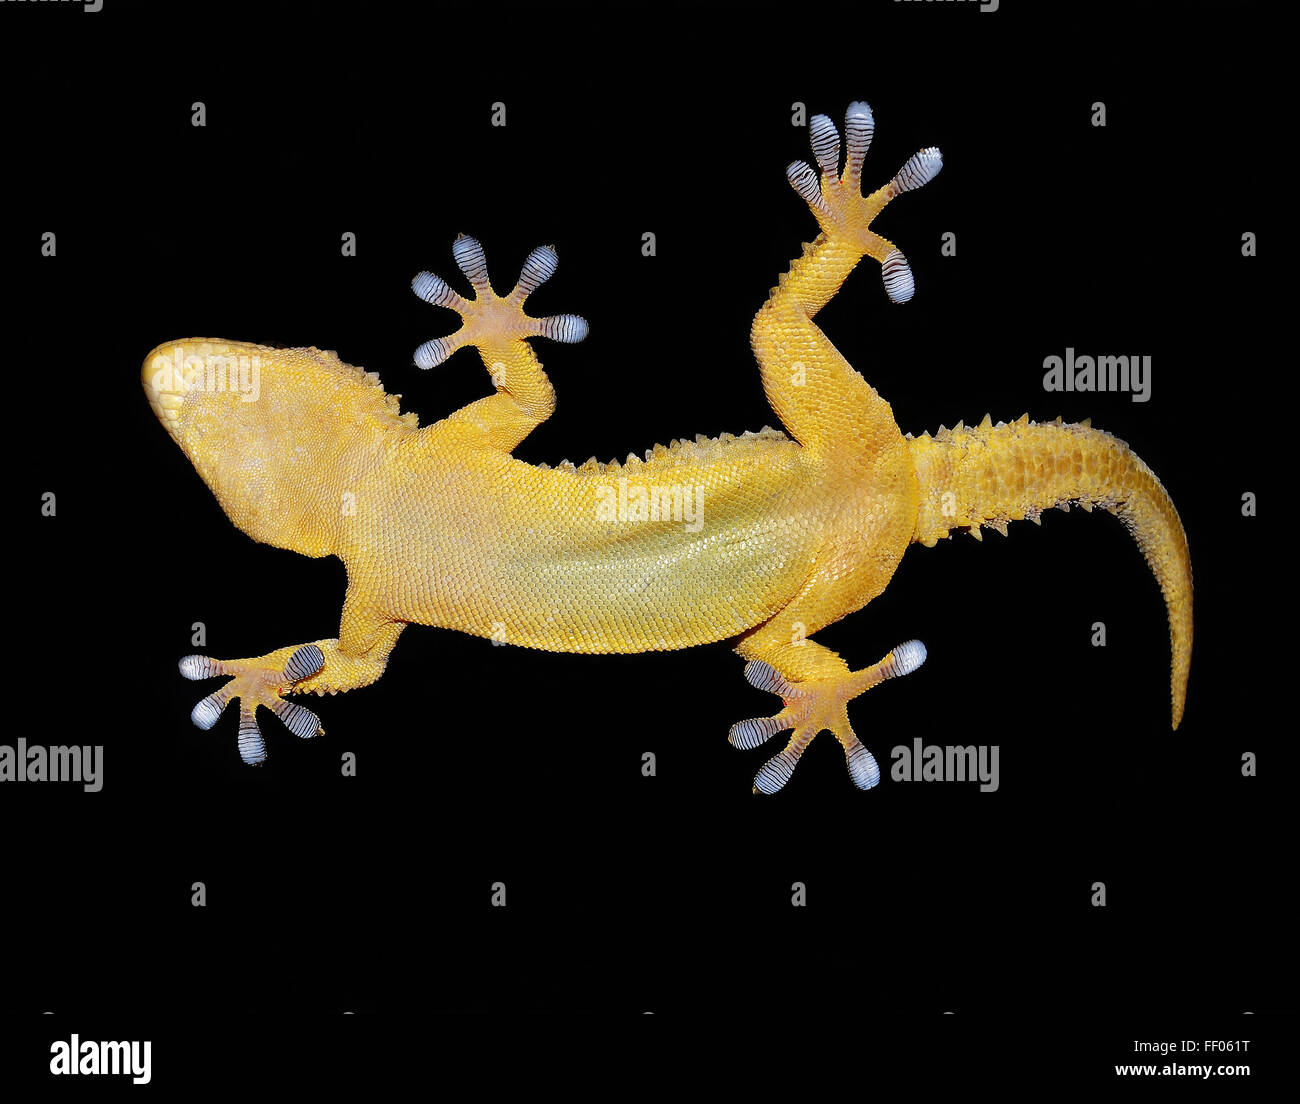 gecko showing twenty adhesive fingers on the glass Stock Photo